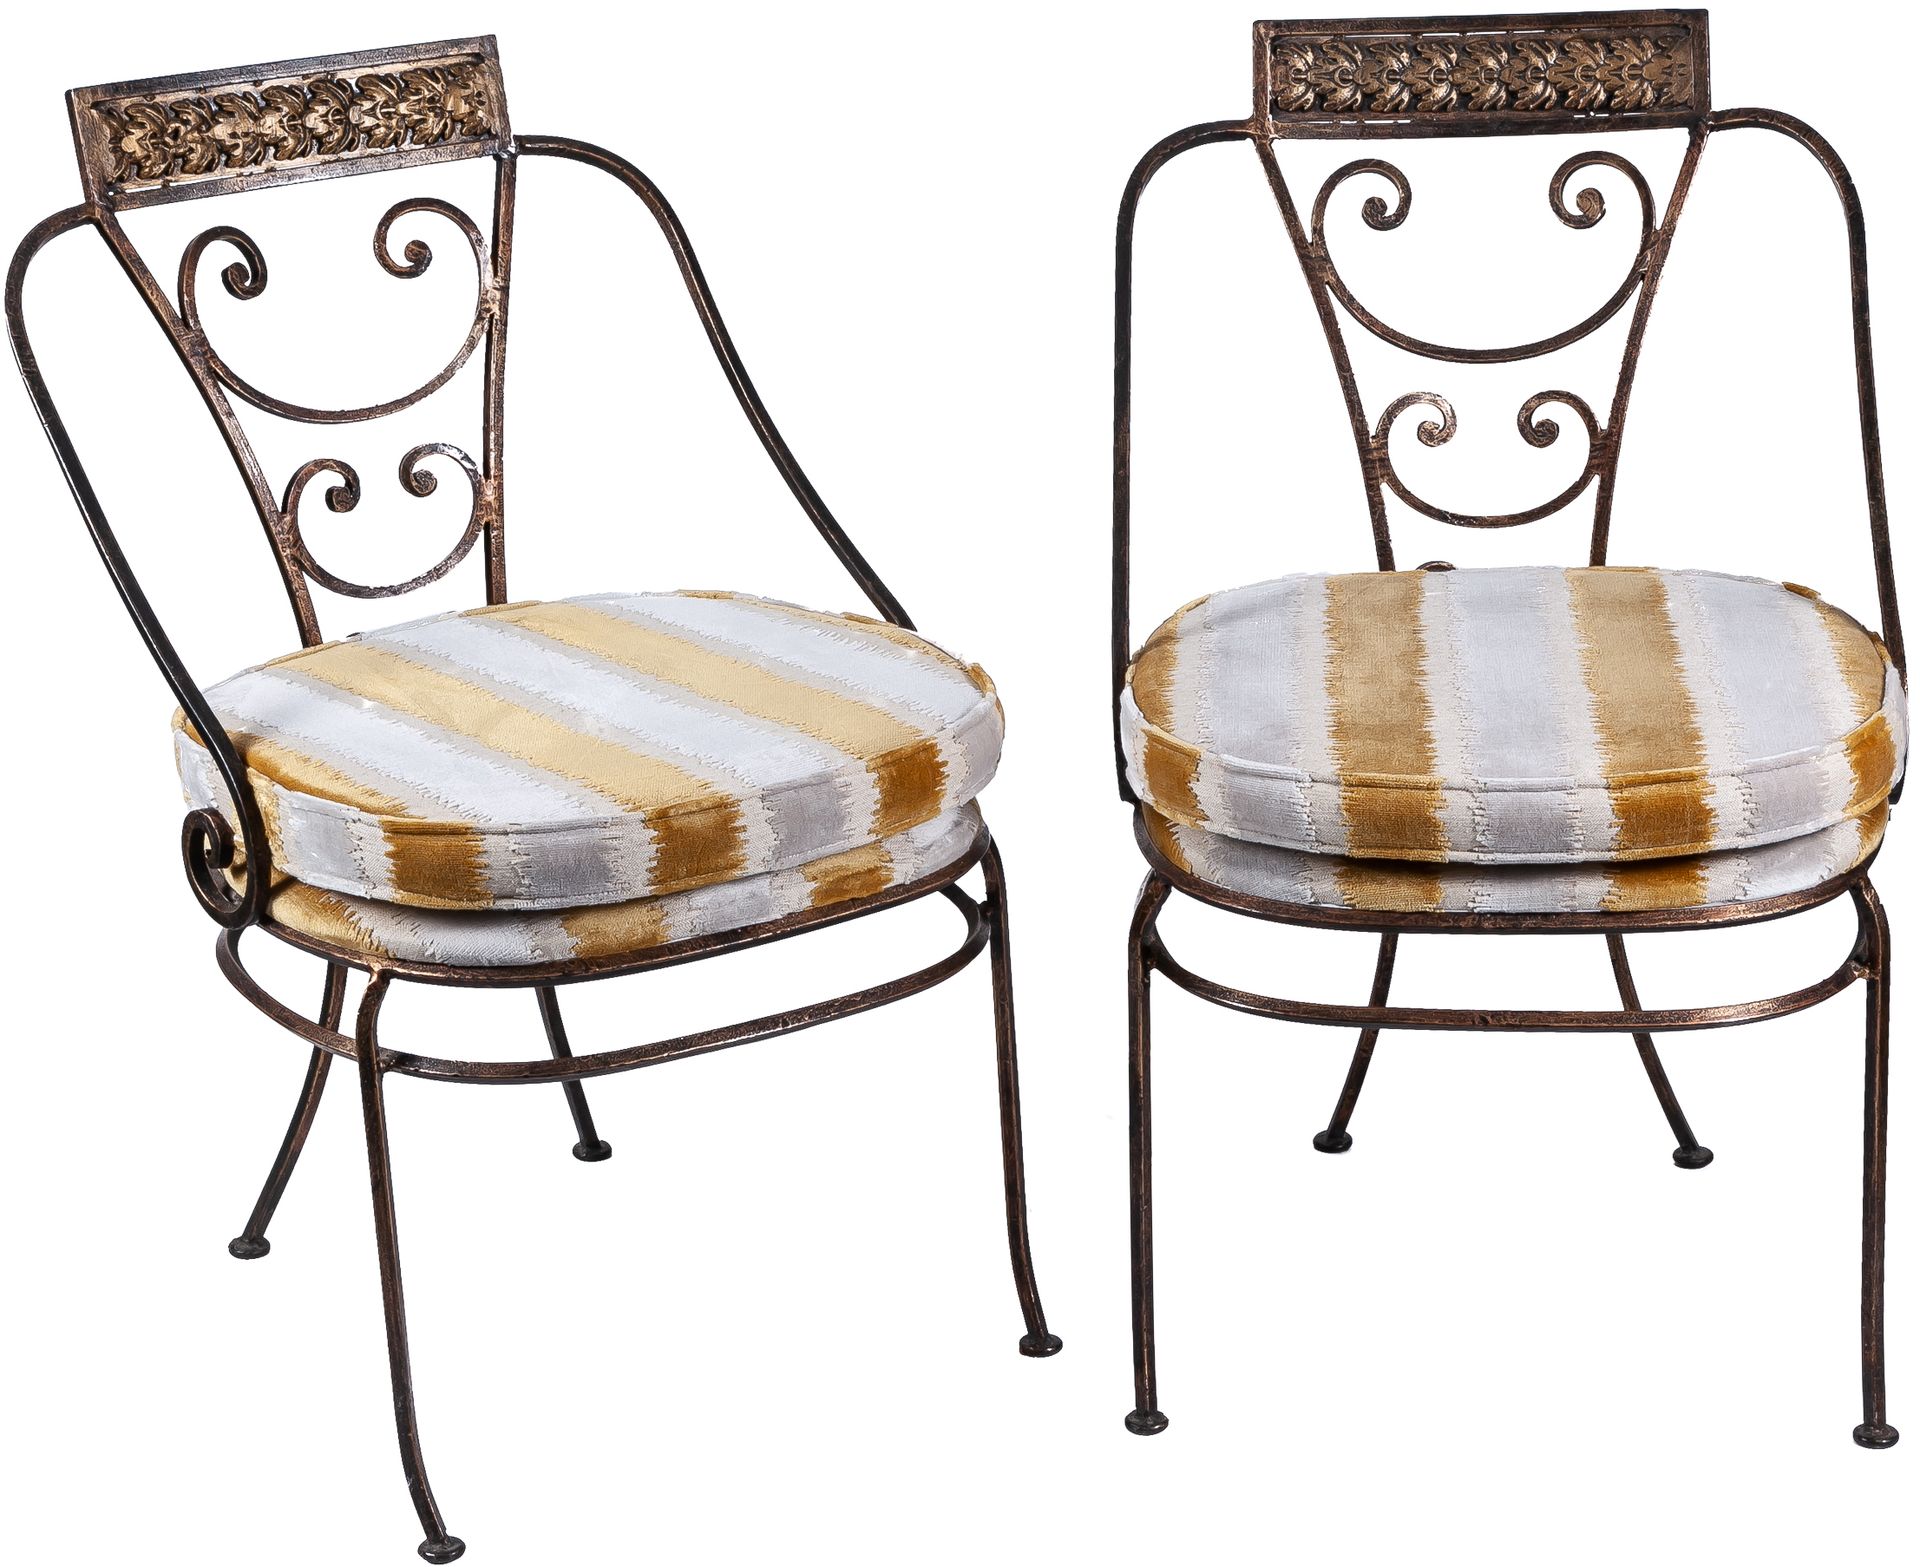 Null 一对新古典主义风格的铜锈铁椅

93 x 50 x 53 厘米

600 - 800 €